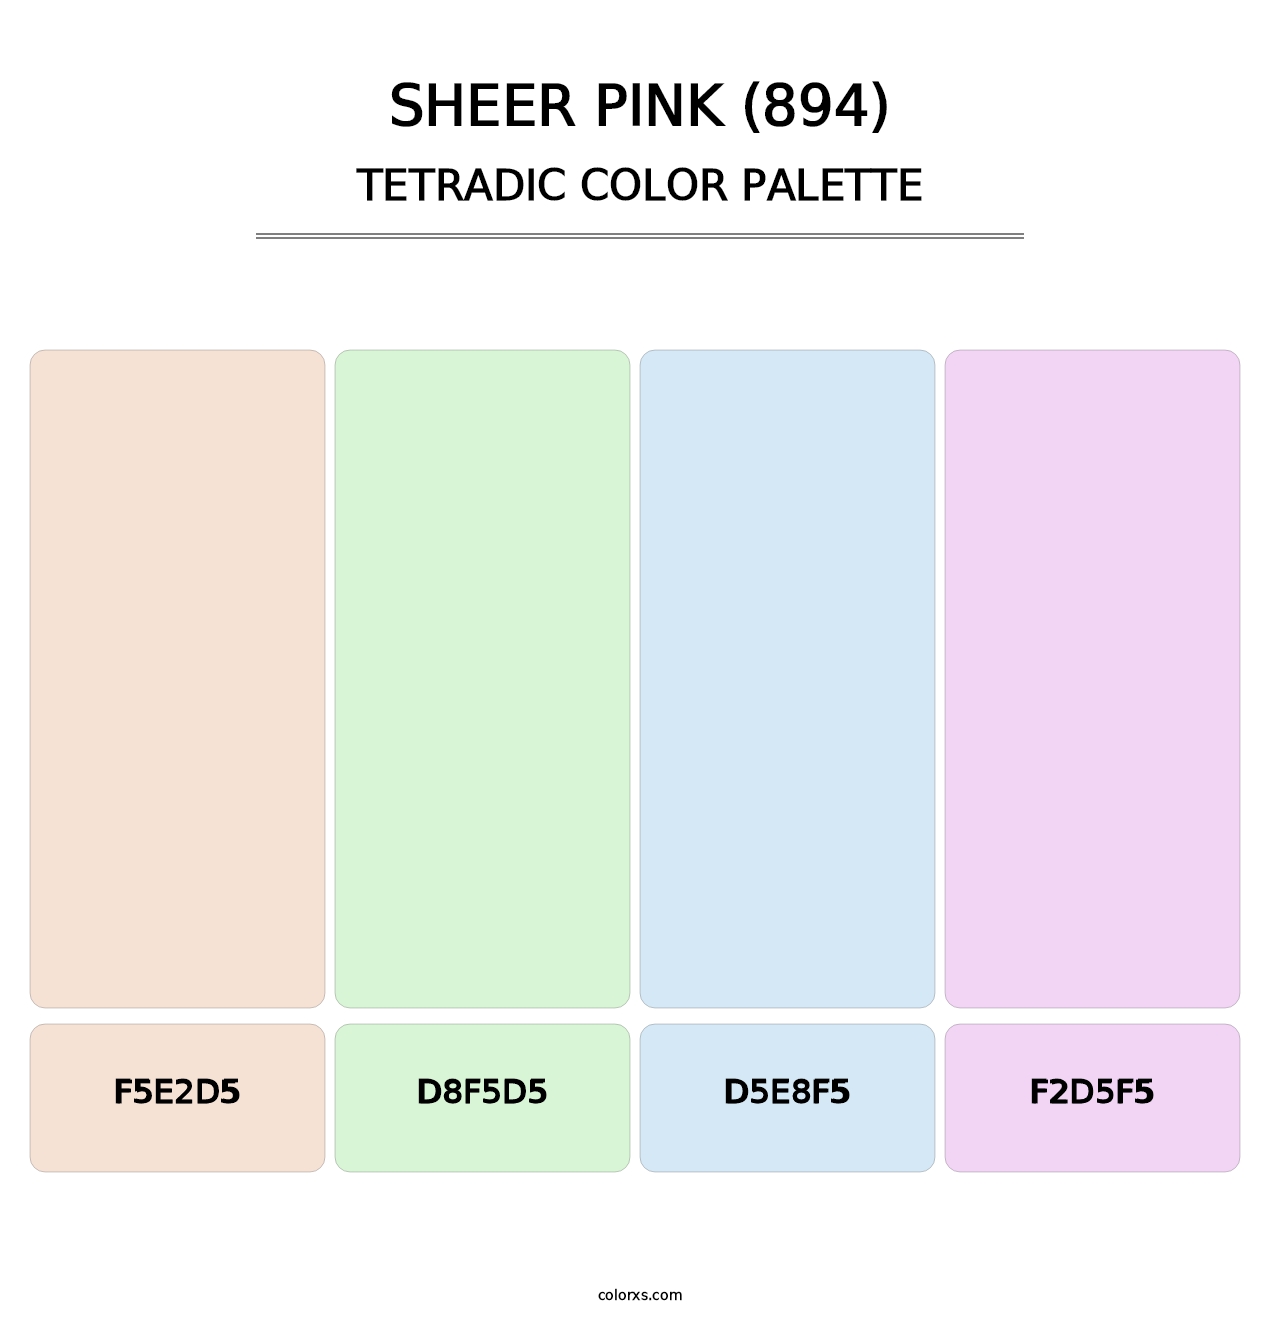 Sheer Pink (894) - Tetradic Color Palette